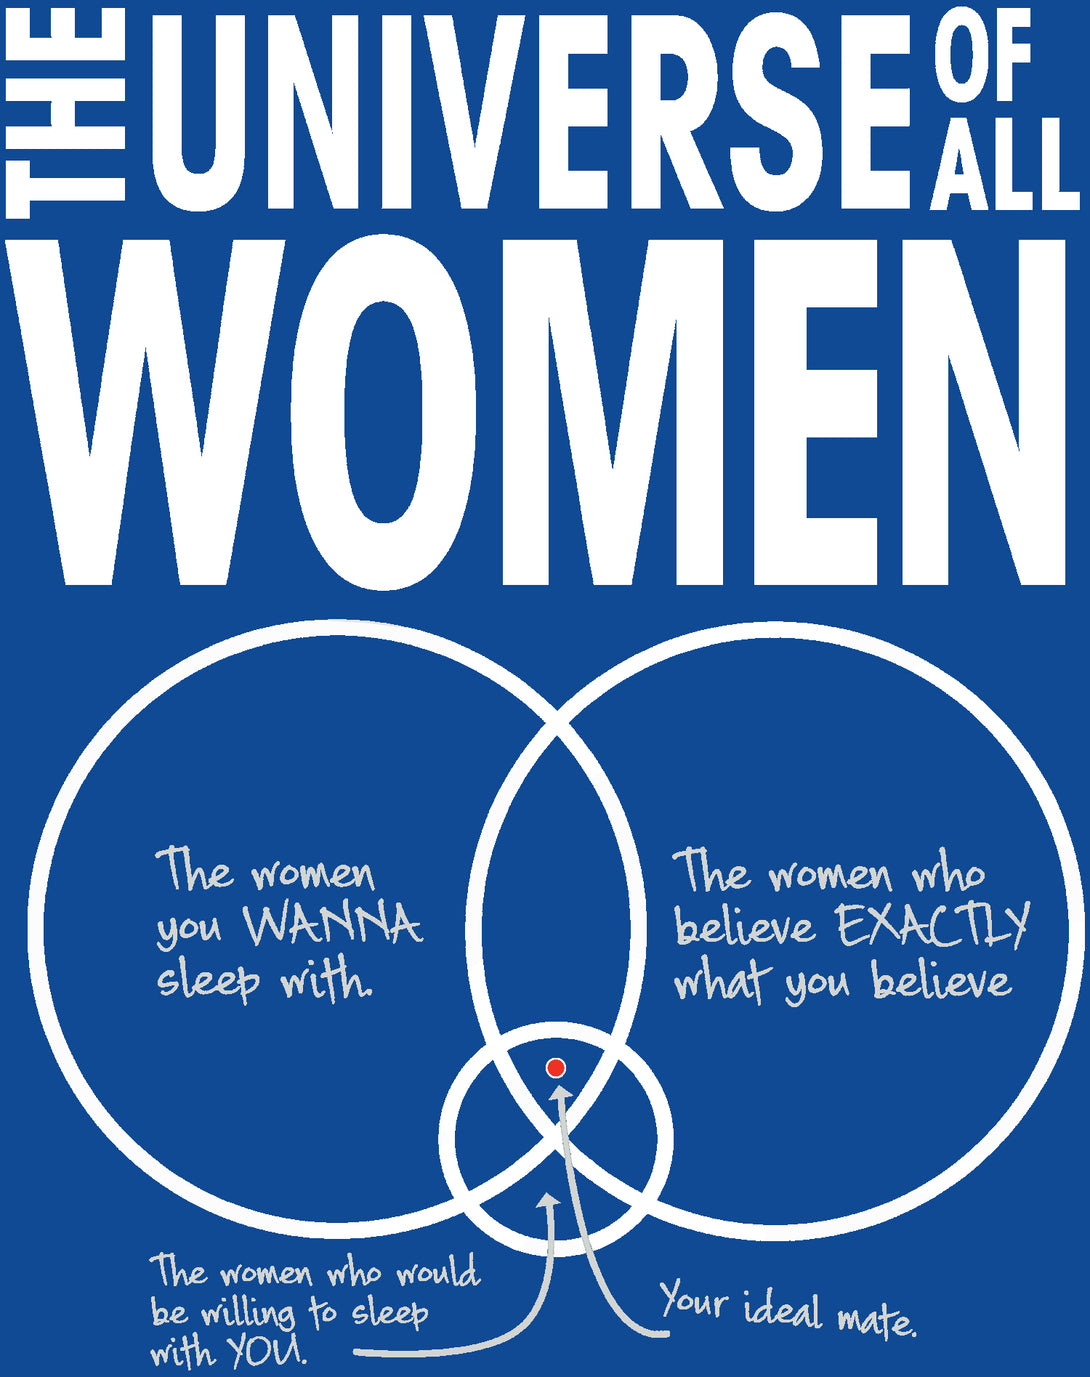 Big Bang Theory Graphic Women Universe Official Men's T-shirt Blue - Urban Species Design Close Up